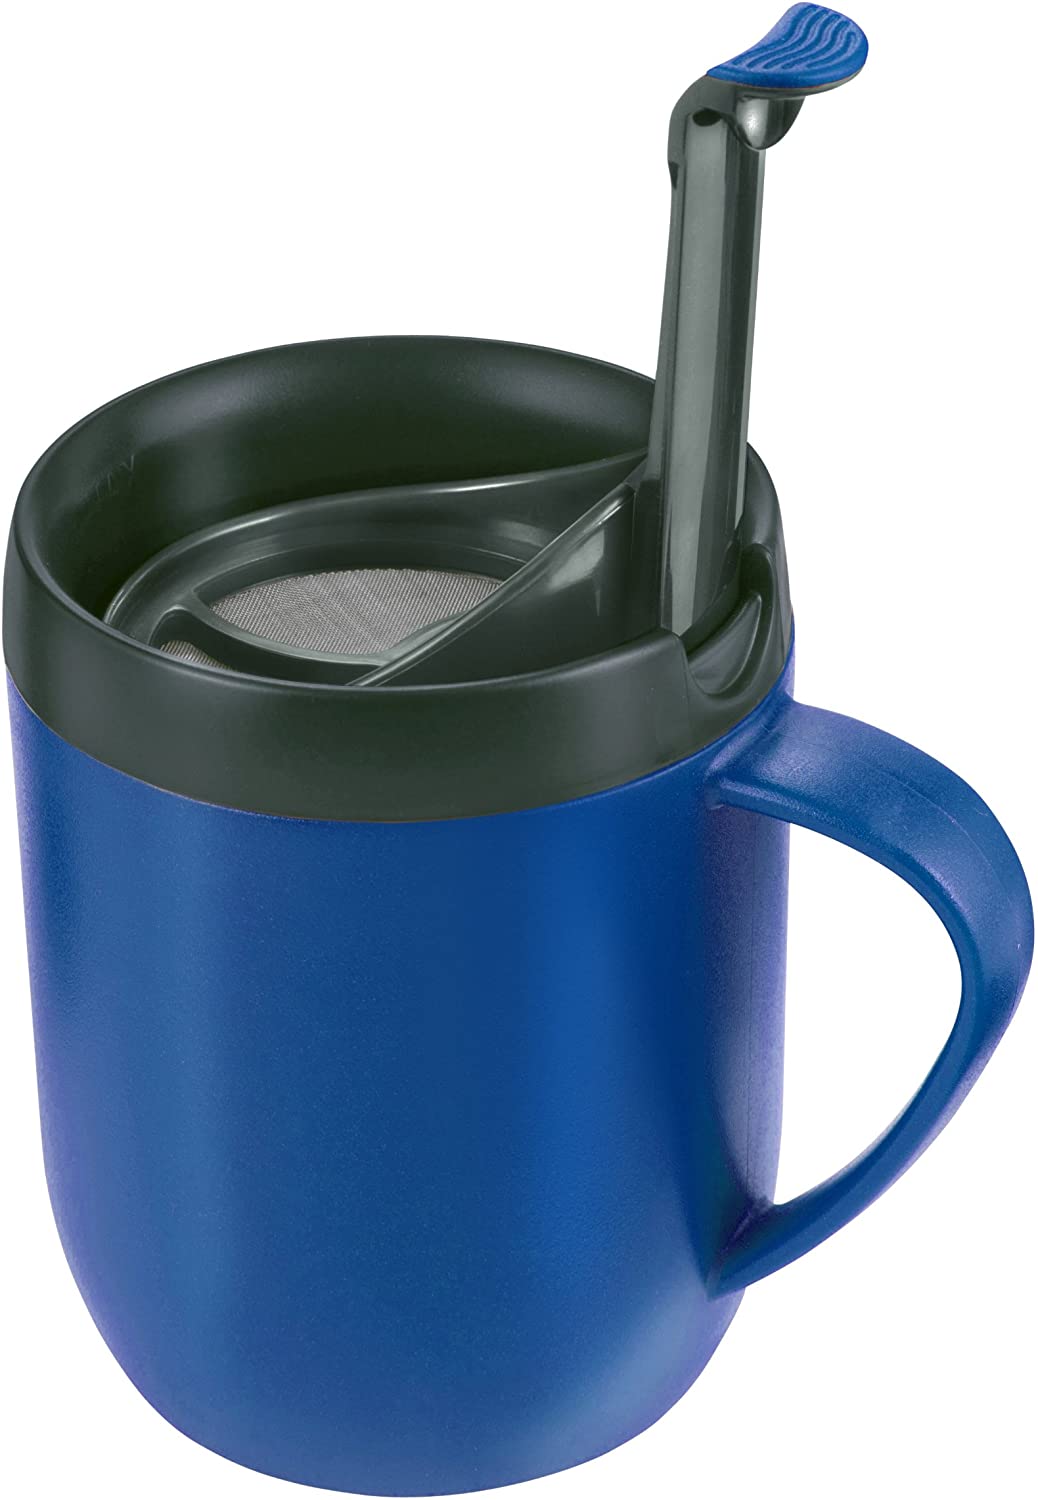 Zyliss Cafetiere Hot Mug, Blue